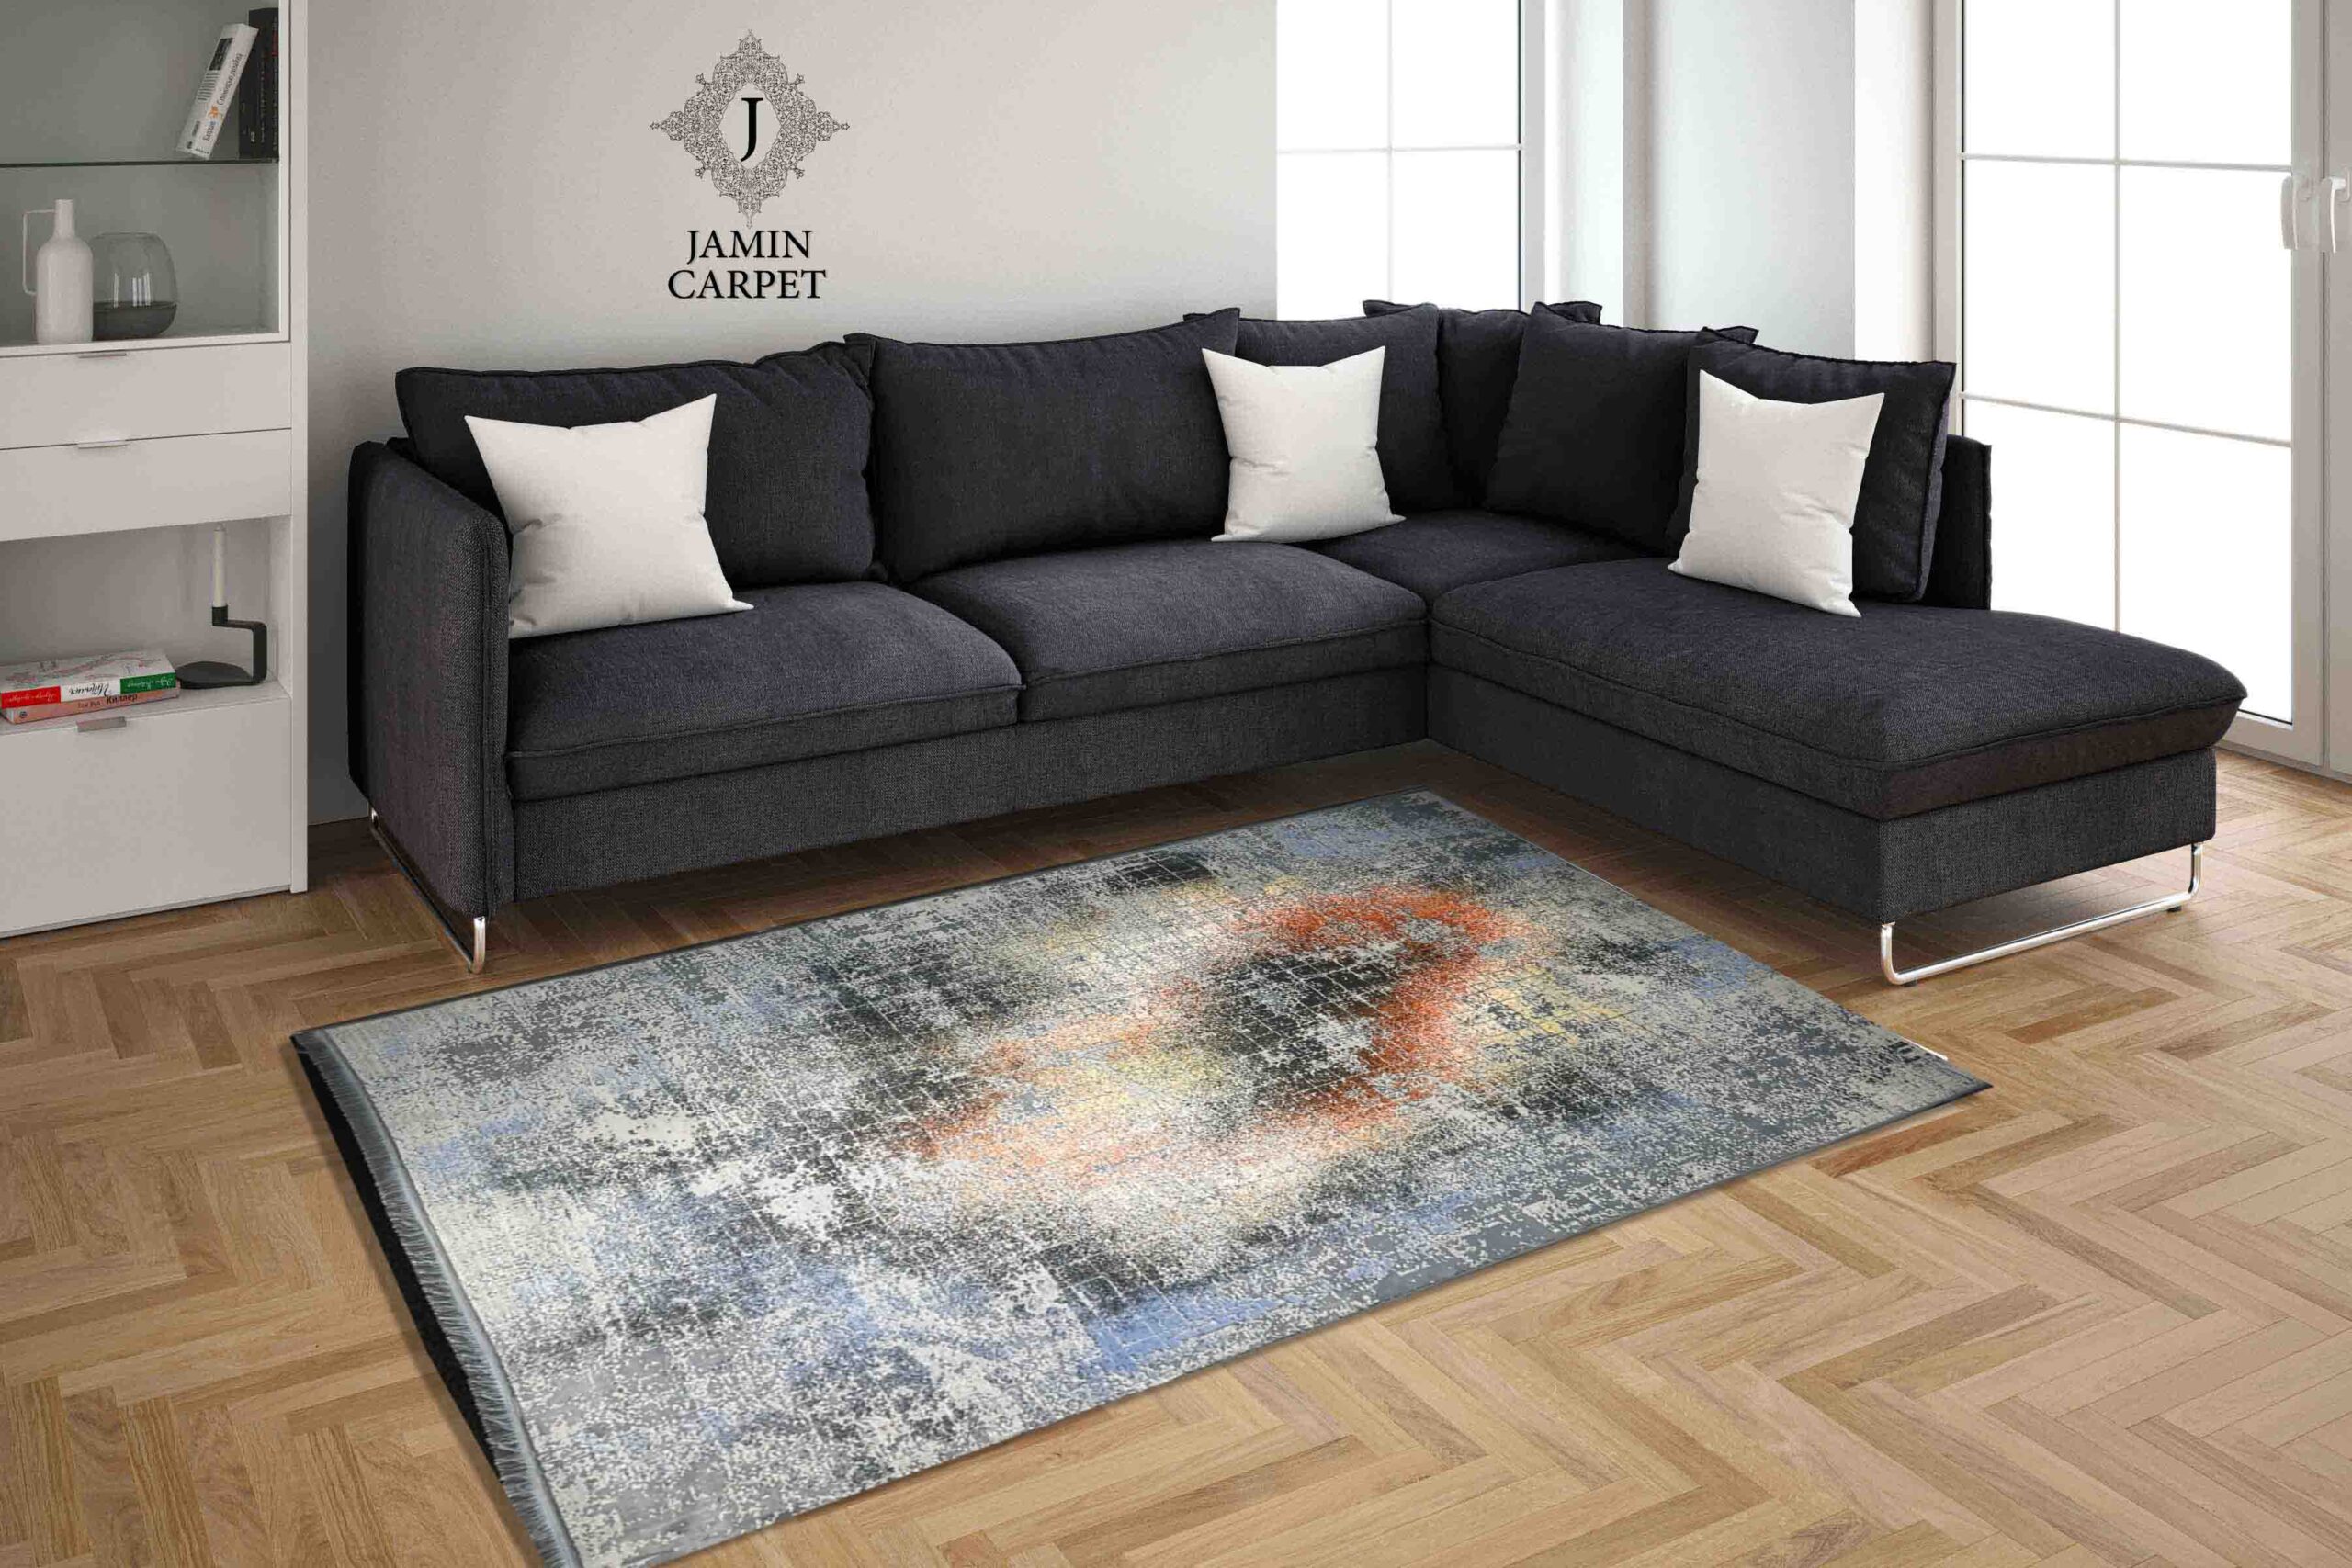 Fantasy carpet, code 230, comb 400, density 1800, all acrylic